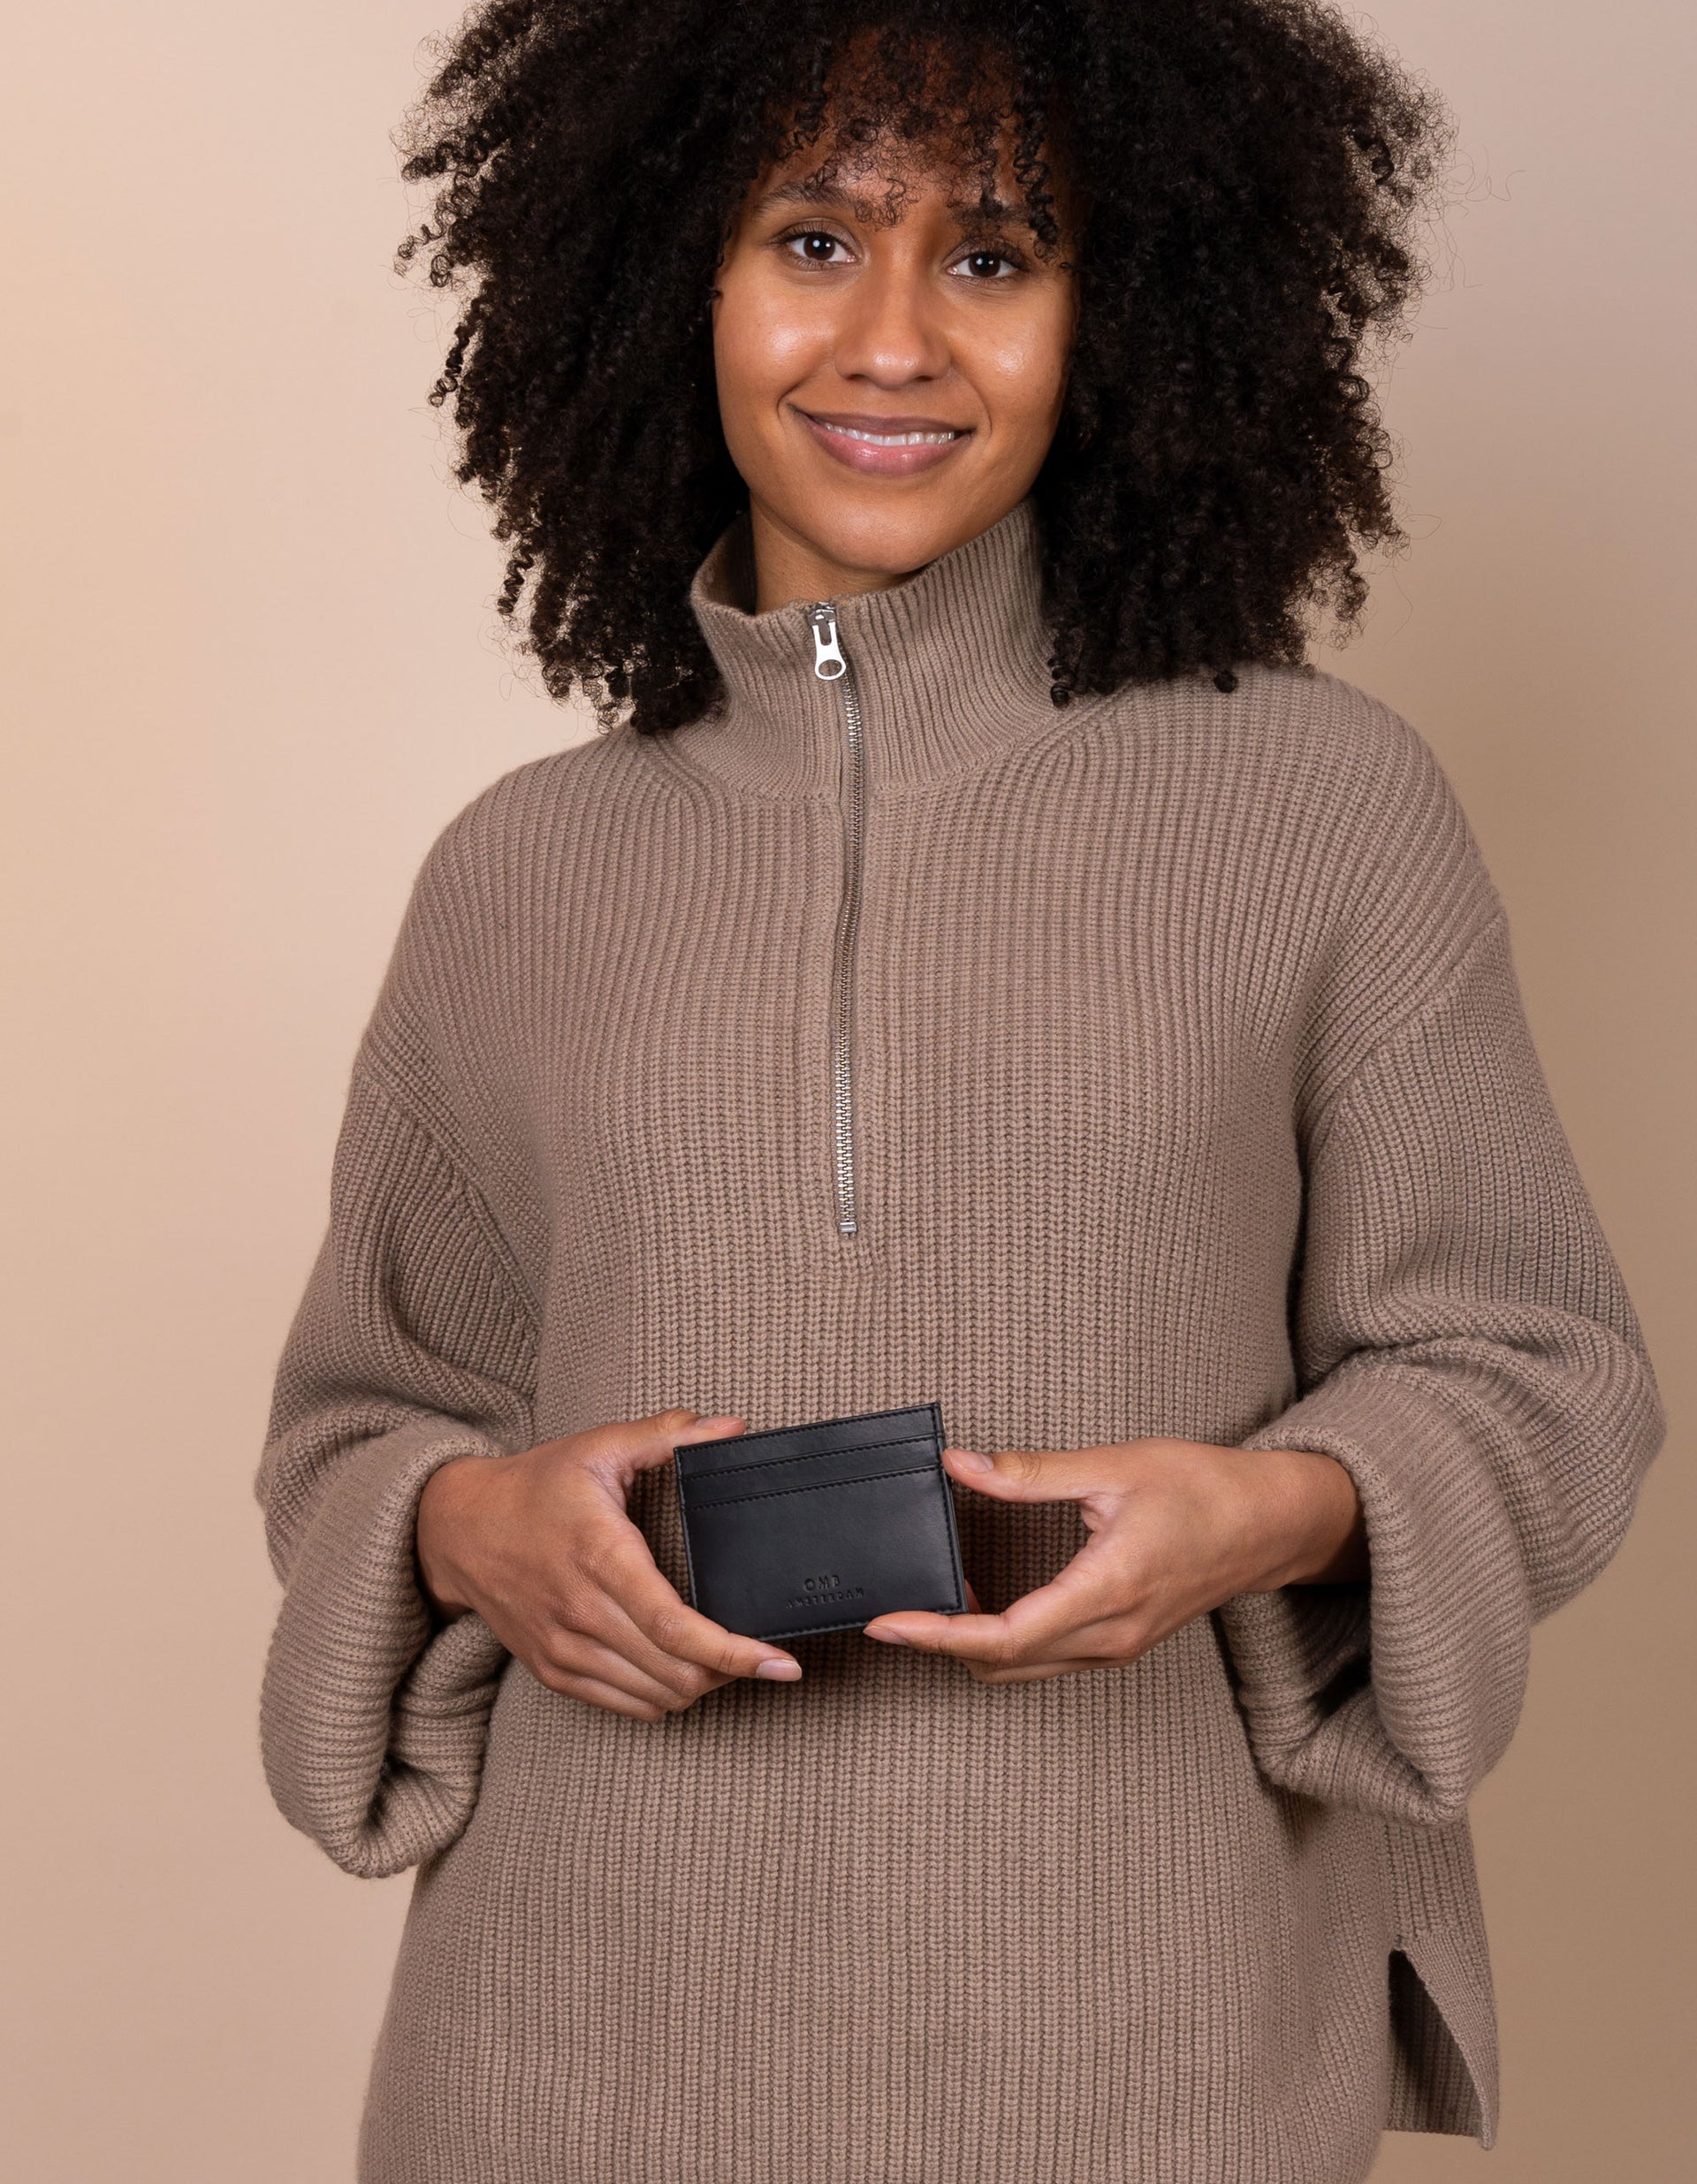 Marks Cardcase Black Apple Leather - Second female model product image